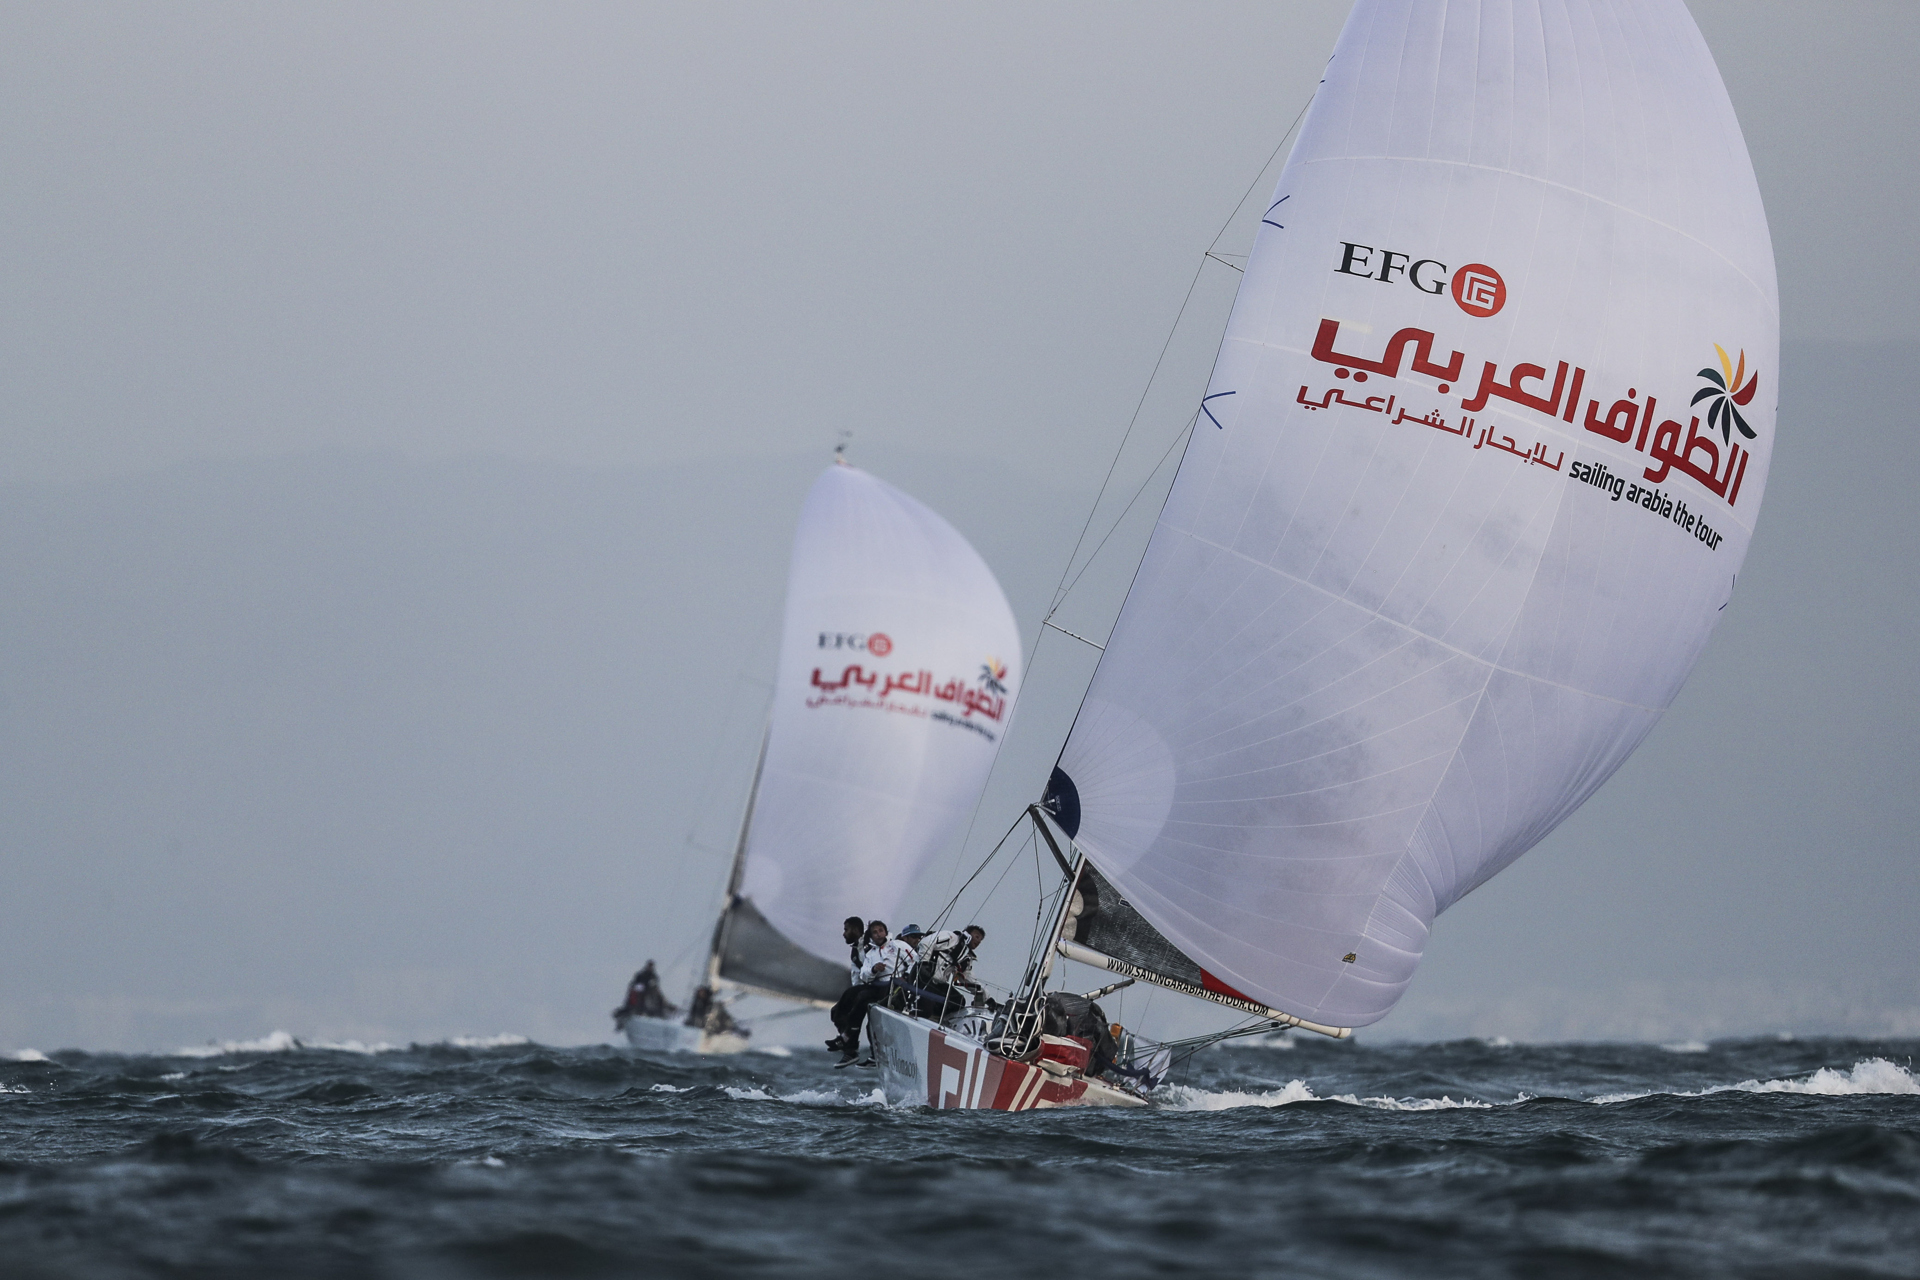  Farr 30  Sailing Arabia  The Tour 2017  Sohar UAE  Day 2